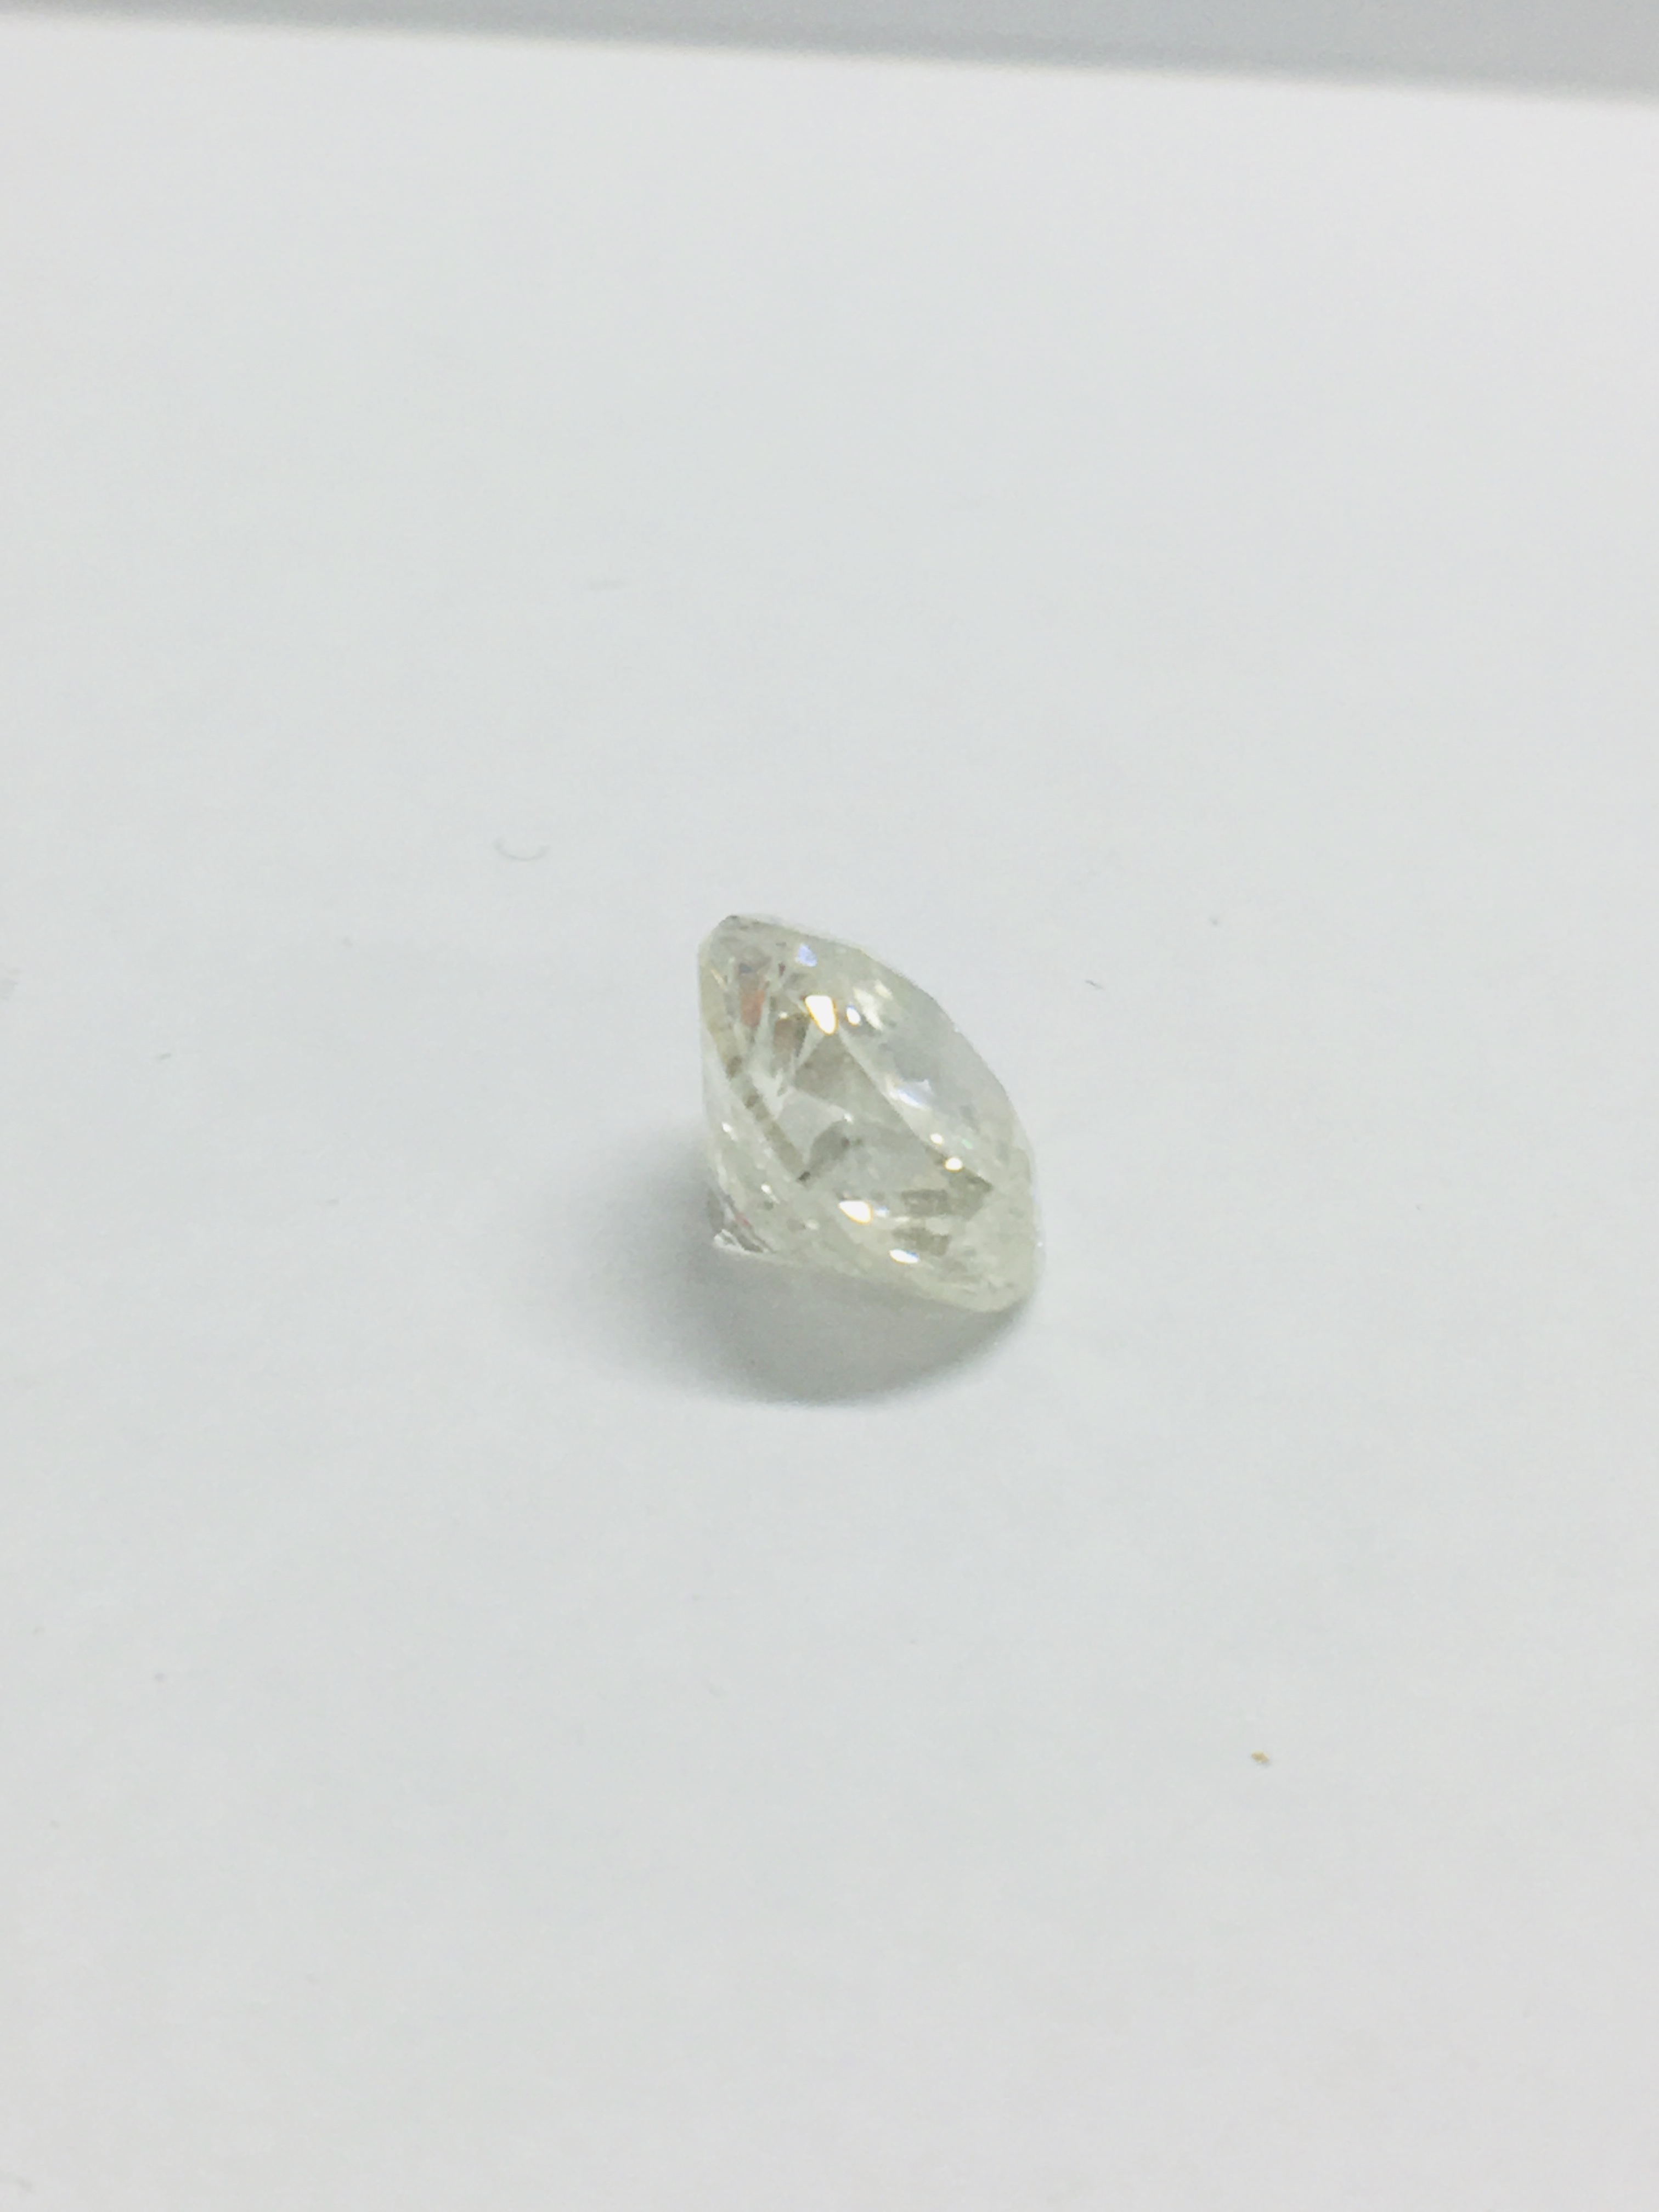 3.34ct Round Brilliant cut Natural Diamond,I colour,si3 clarity - Image 4 of 5